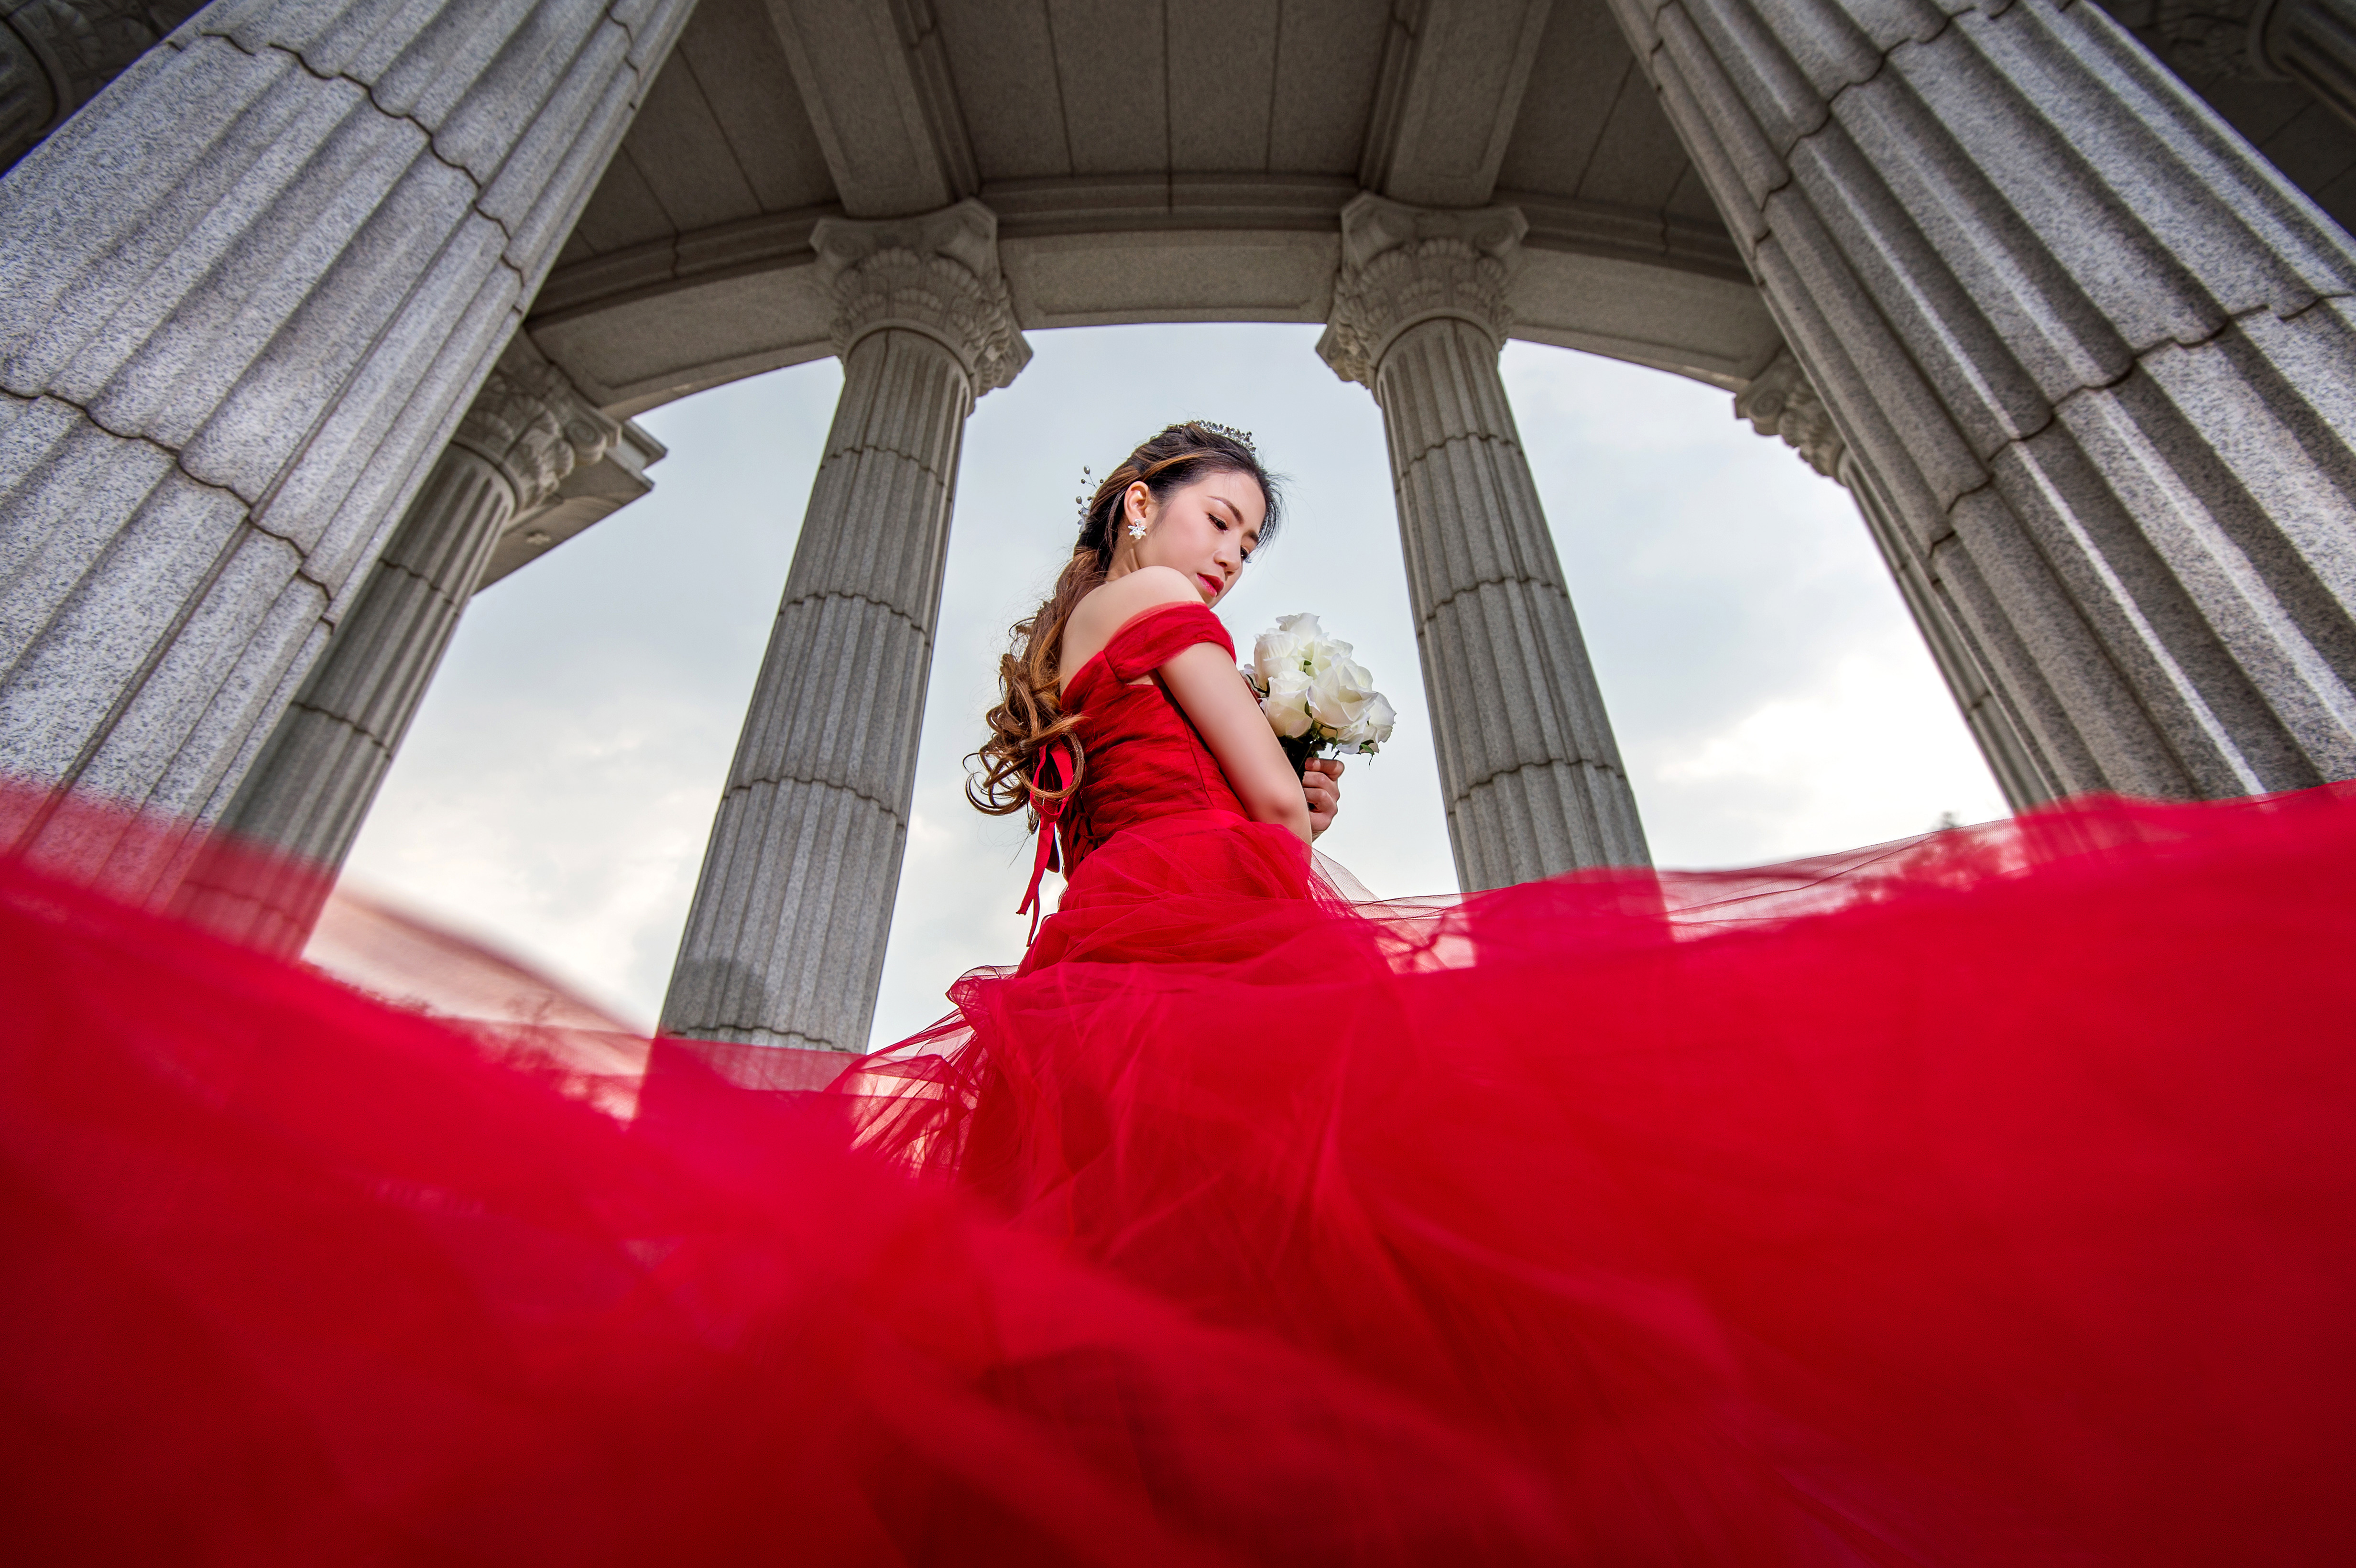 A bride in red wedding dress | Source: Shutterstock